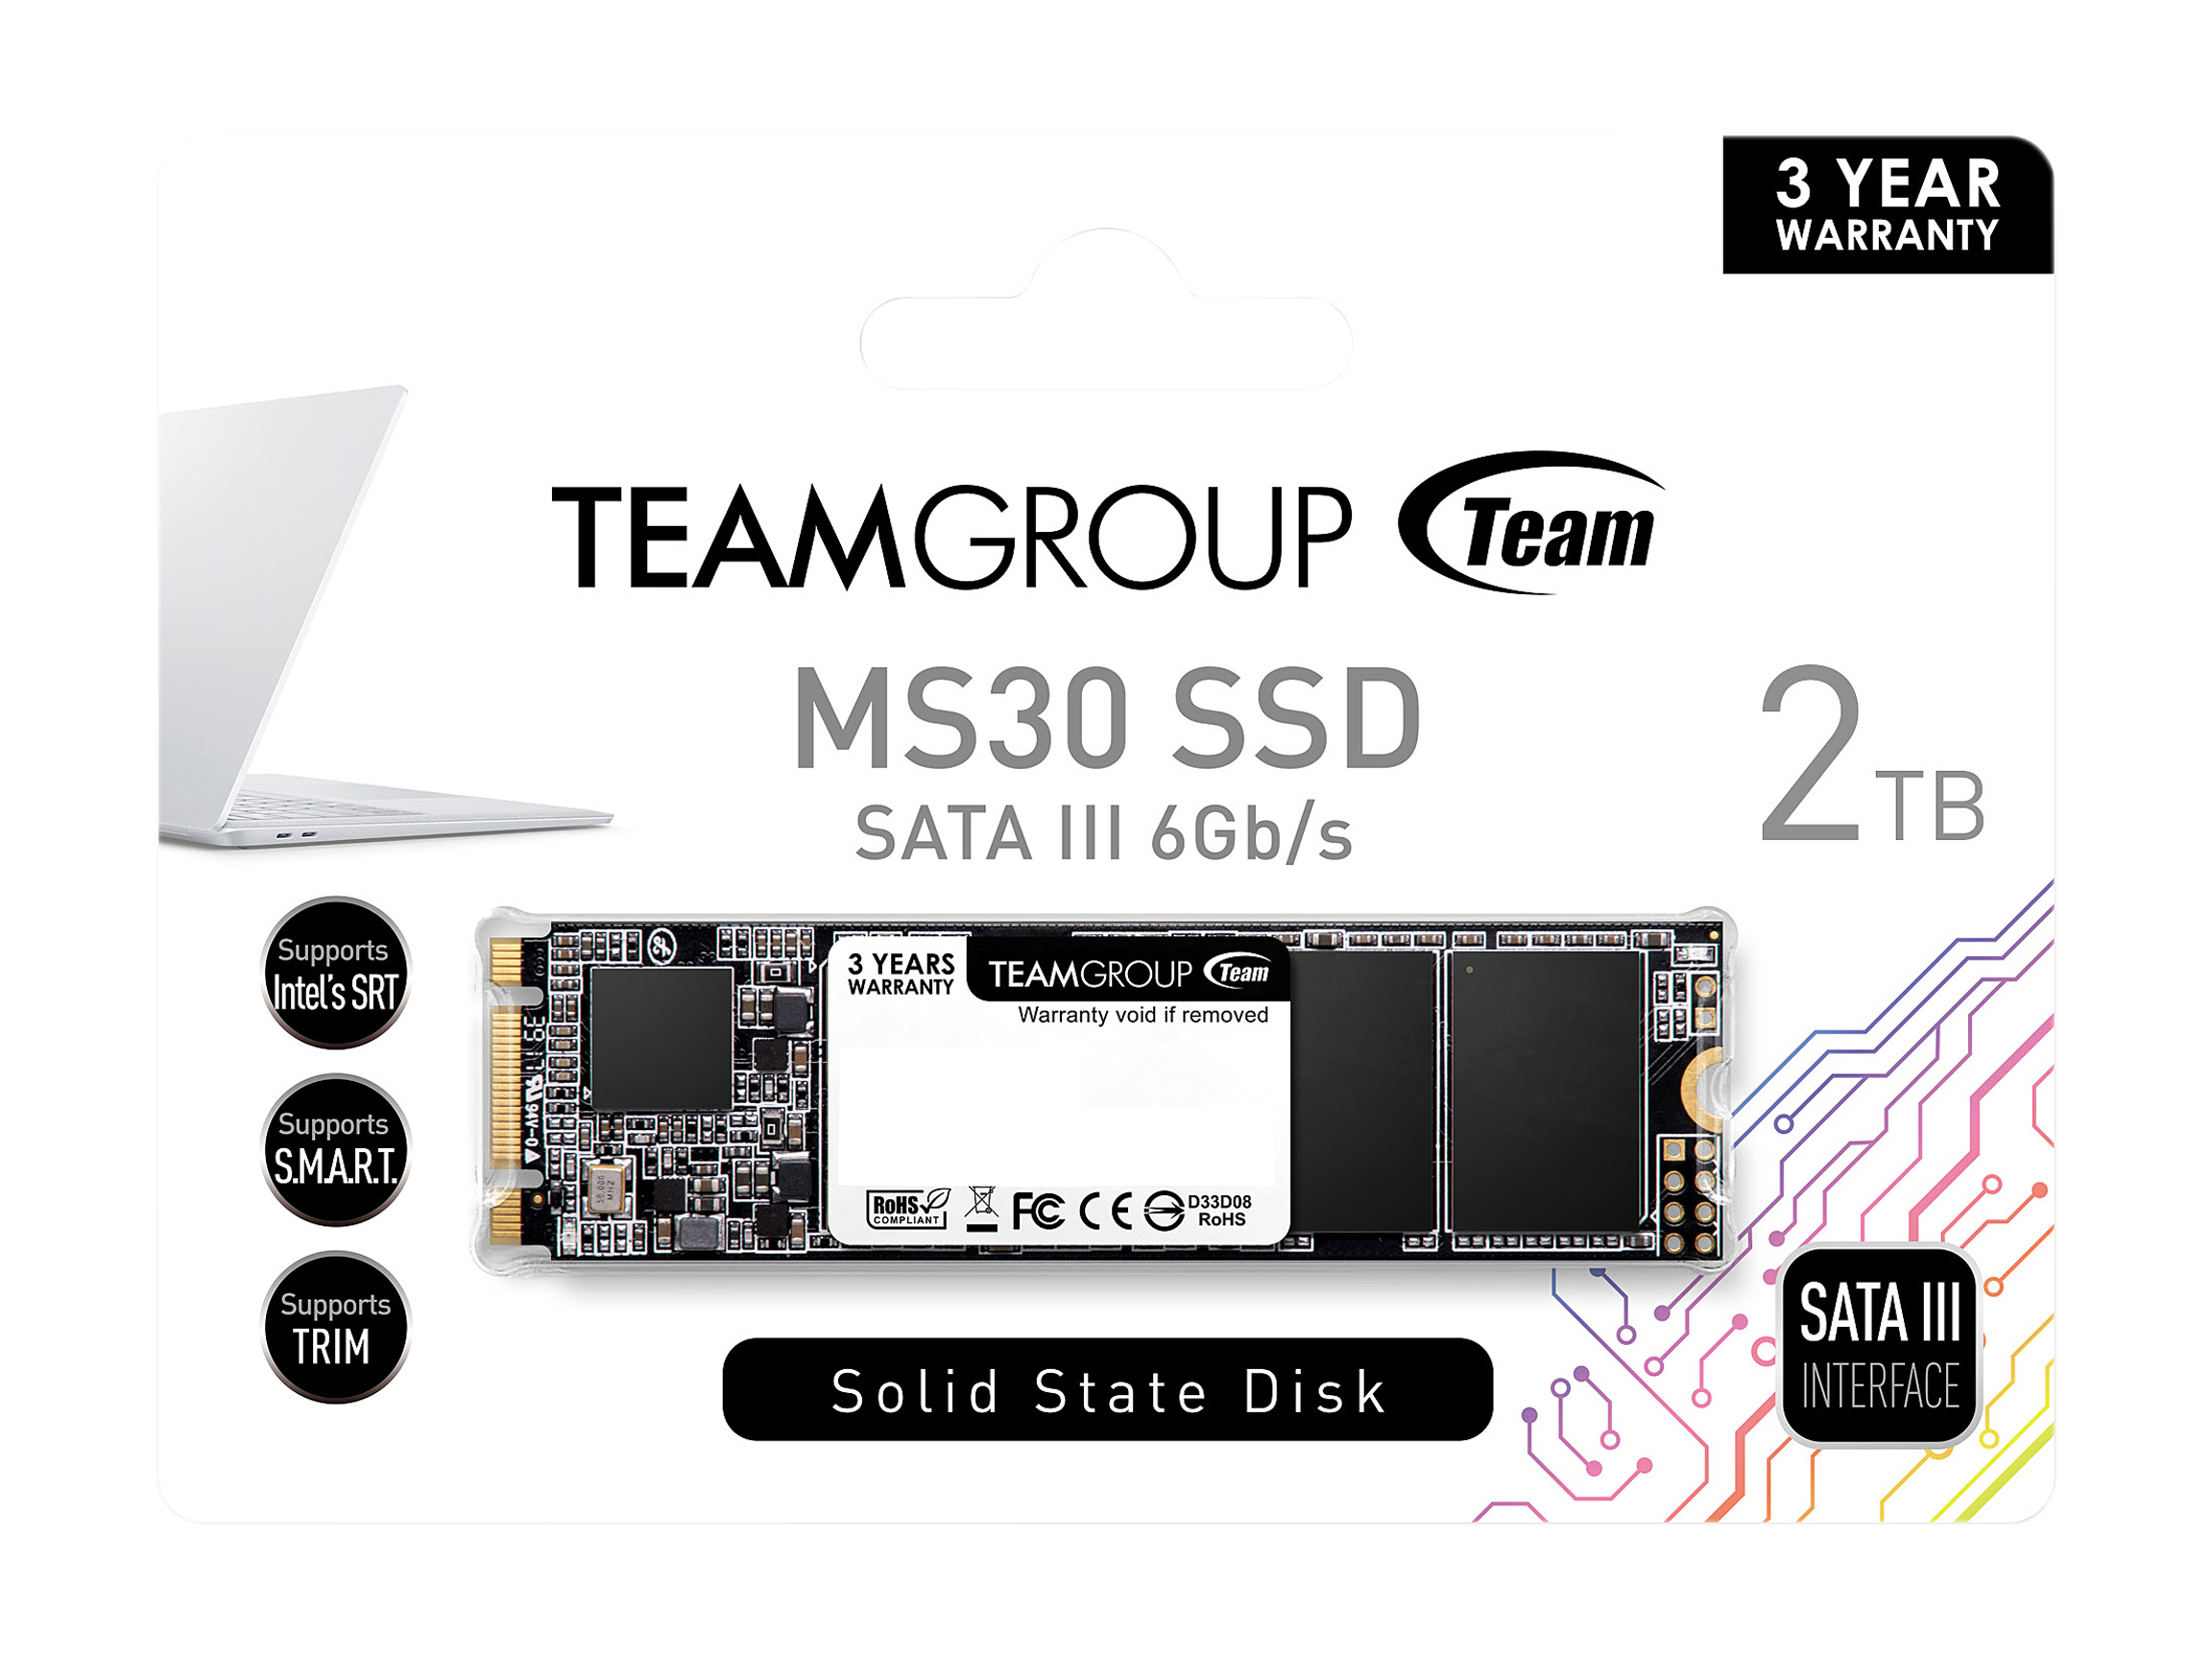 Жесткий диск SSD 2Tb Team MS30 (TM8PS7002T0C101)